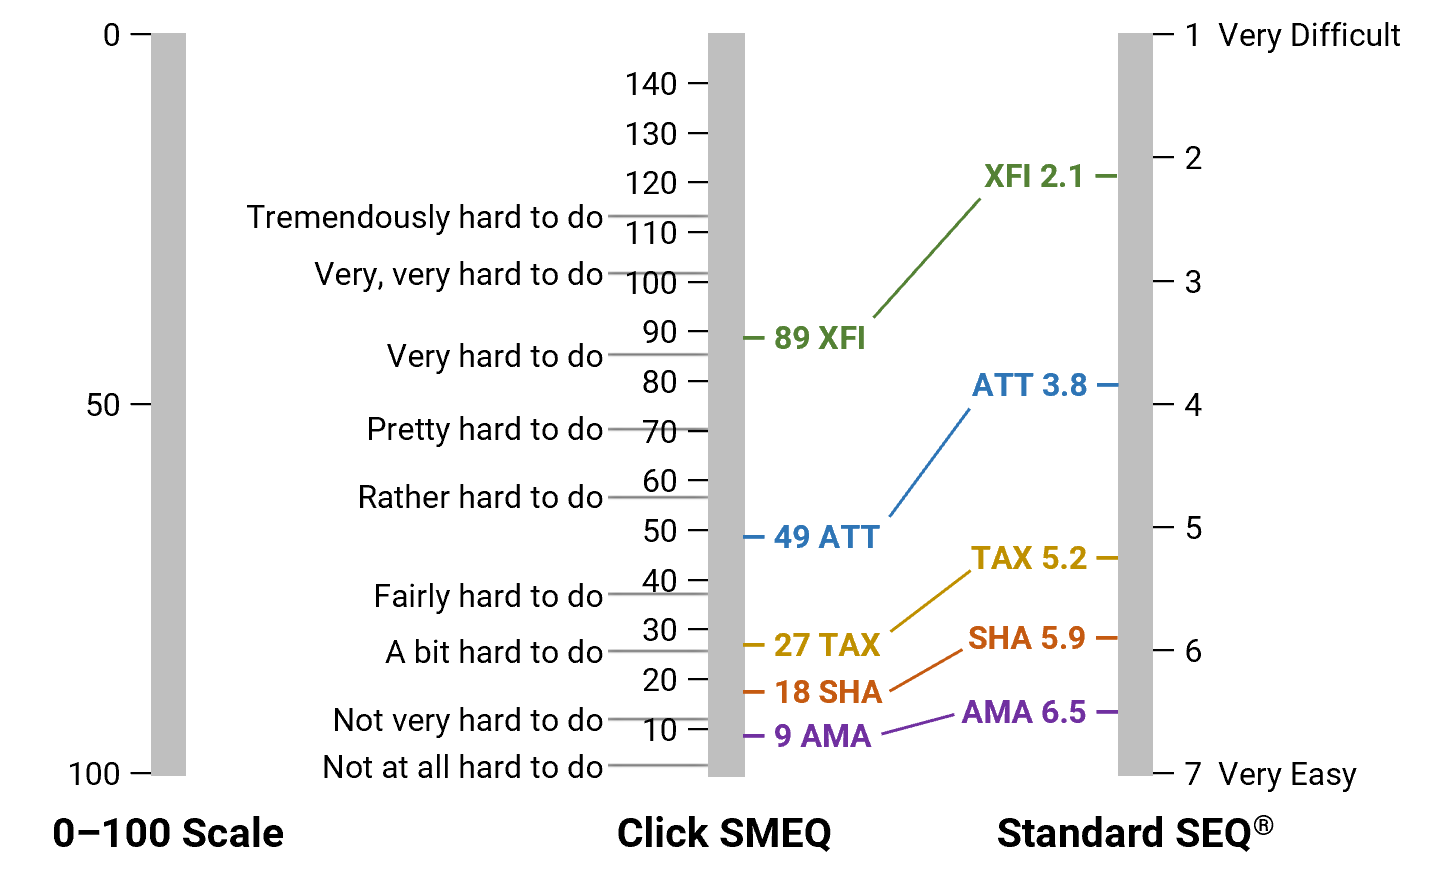 Alignment of SEQ and click SMEQ scores for the five tasks (full range of SMEQ).